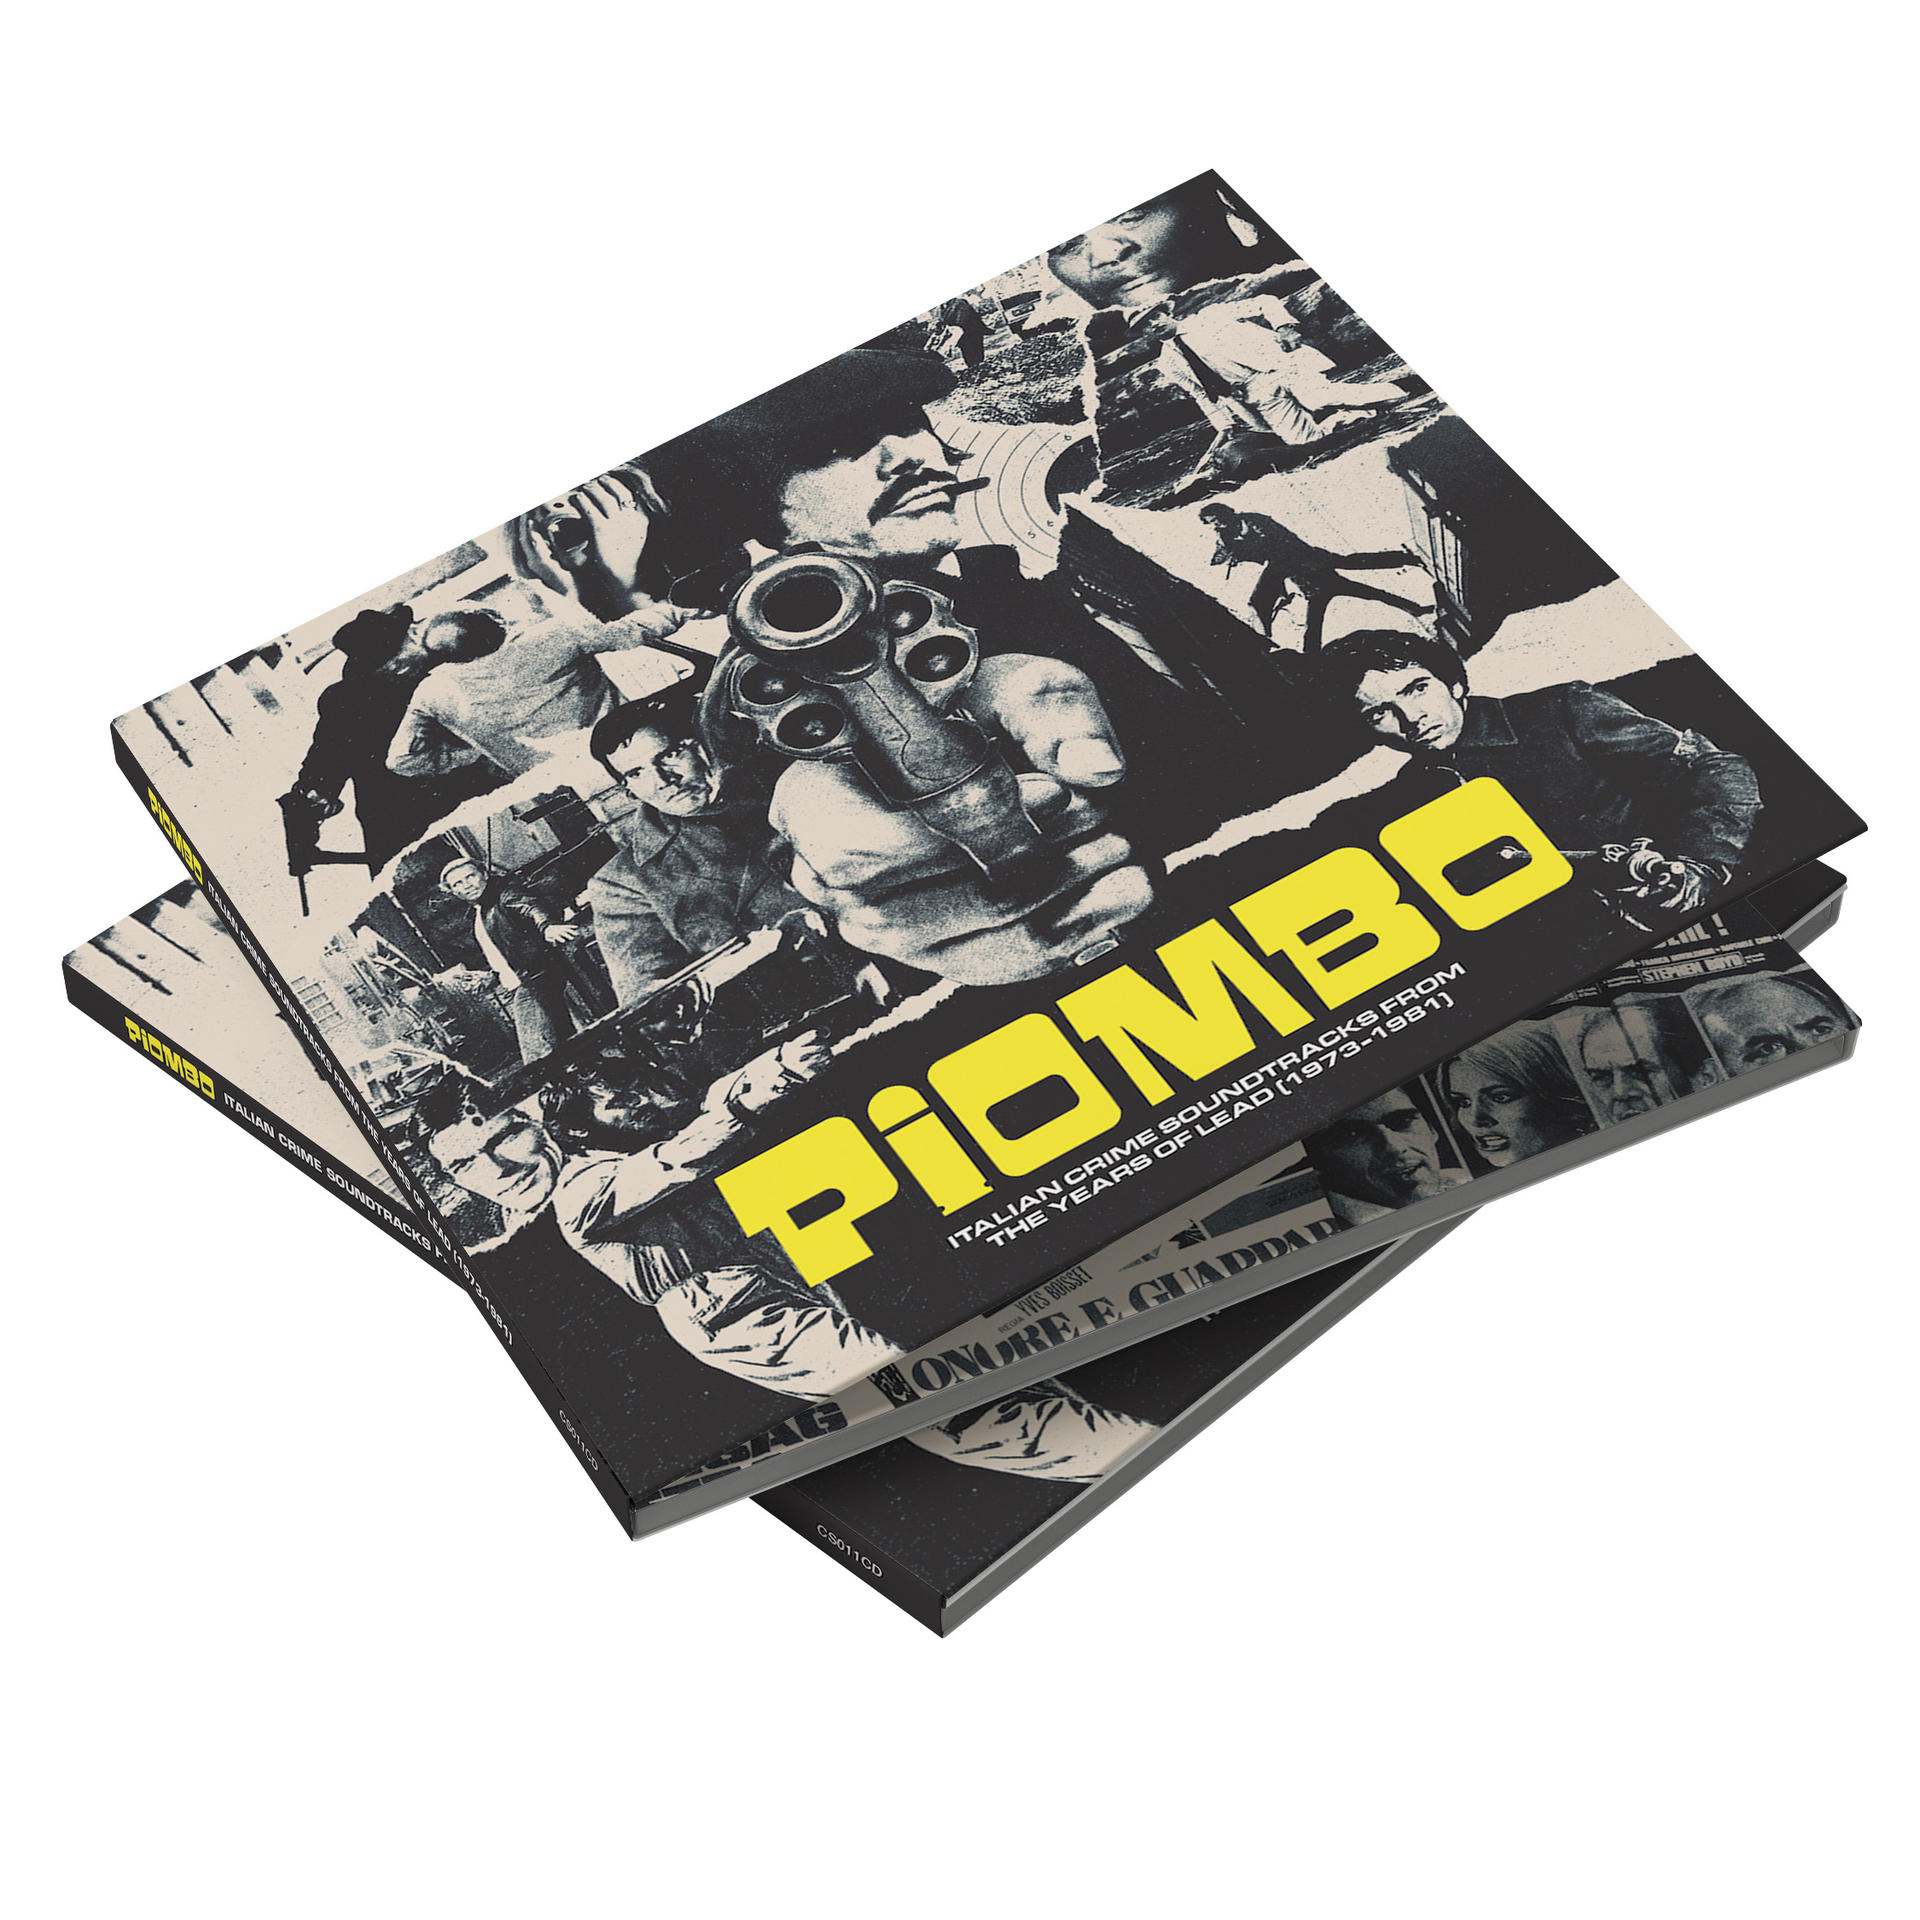 VARIOUS - Piombo-The Crime-Funk Sound (CD) - Of Cinema Italian